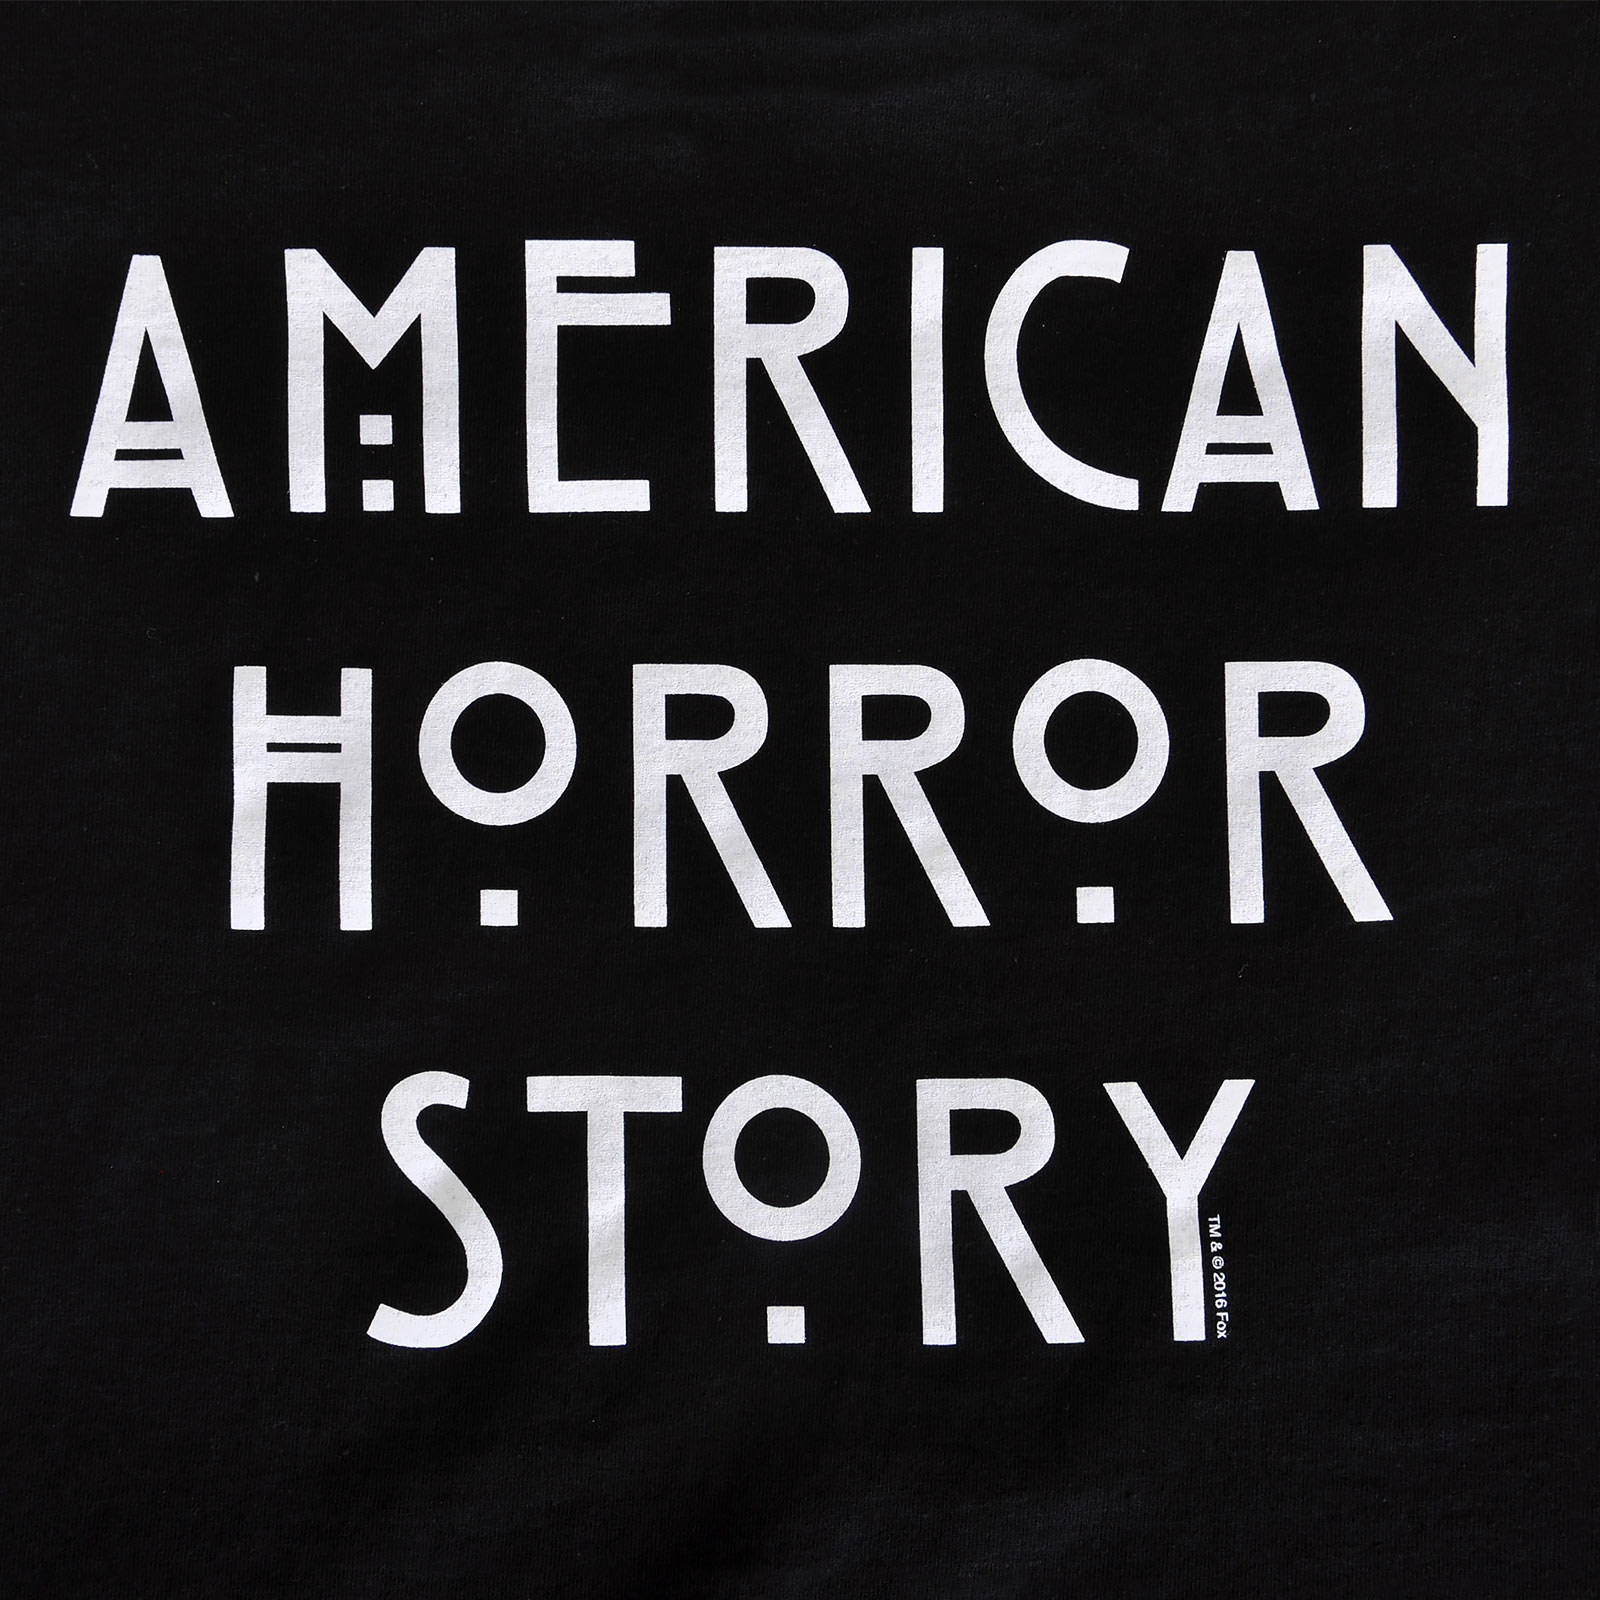 American Horror Story - T-shirt AHS Logo noir